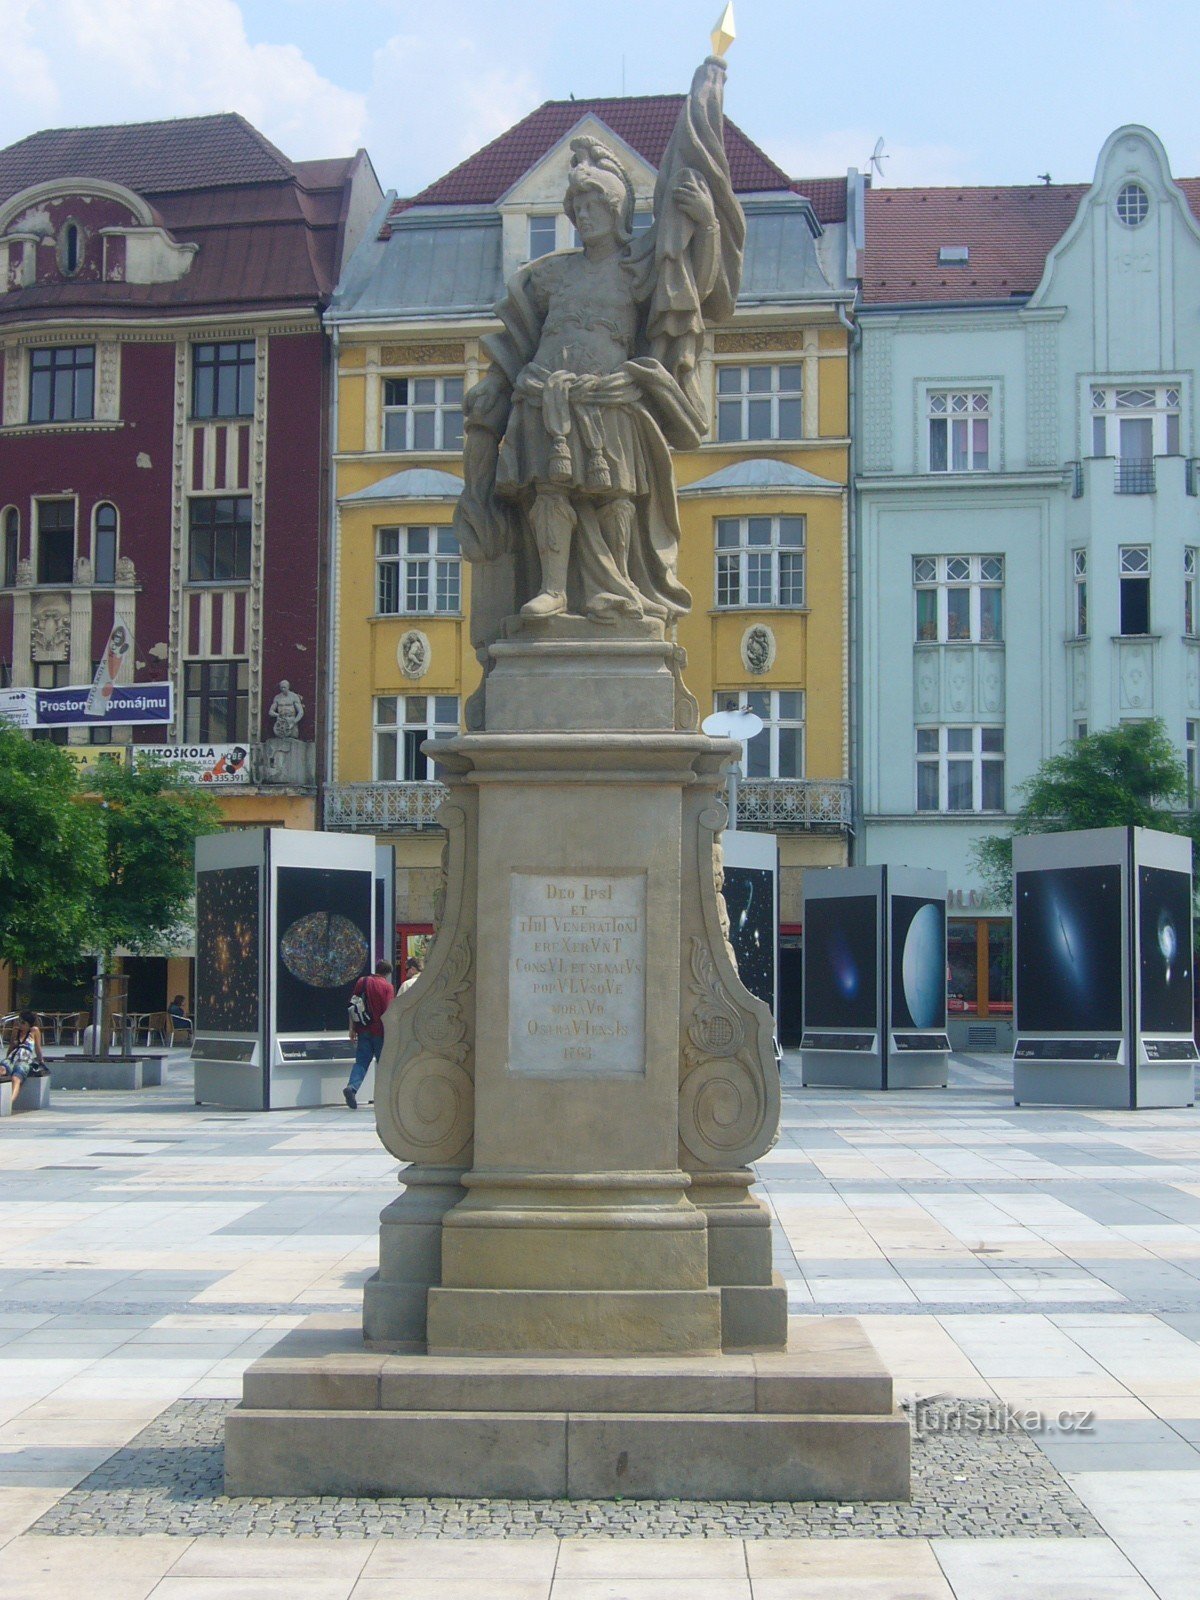 Staty av Saint Florian